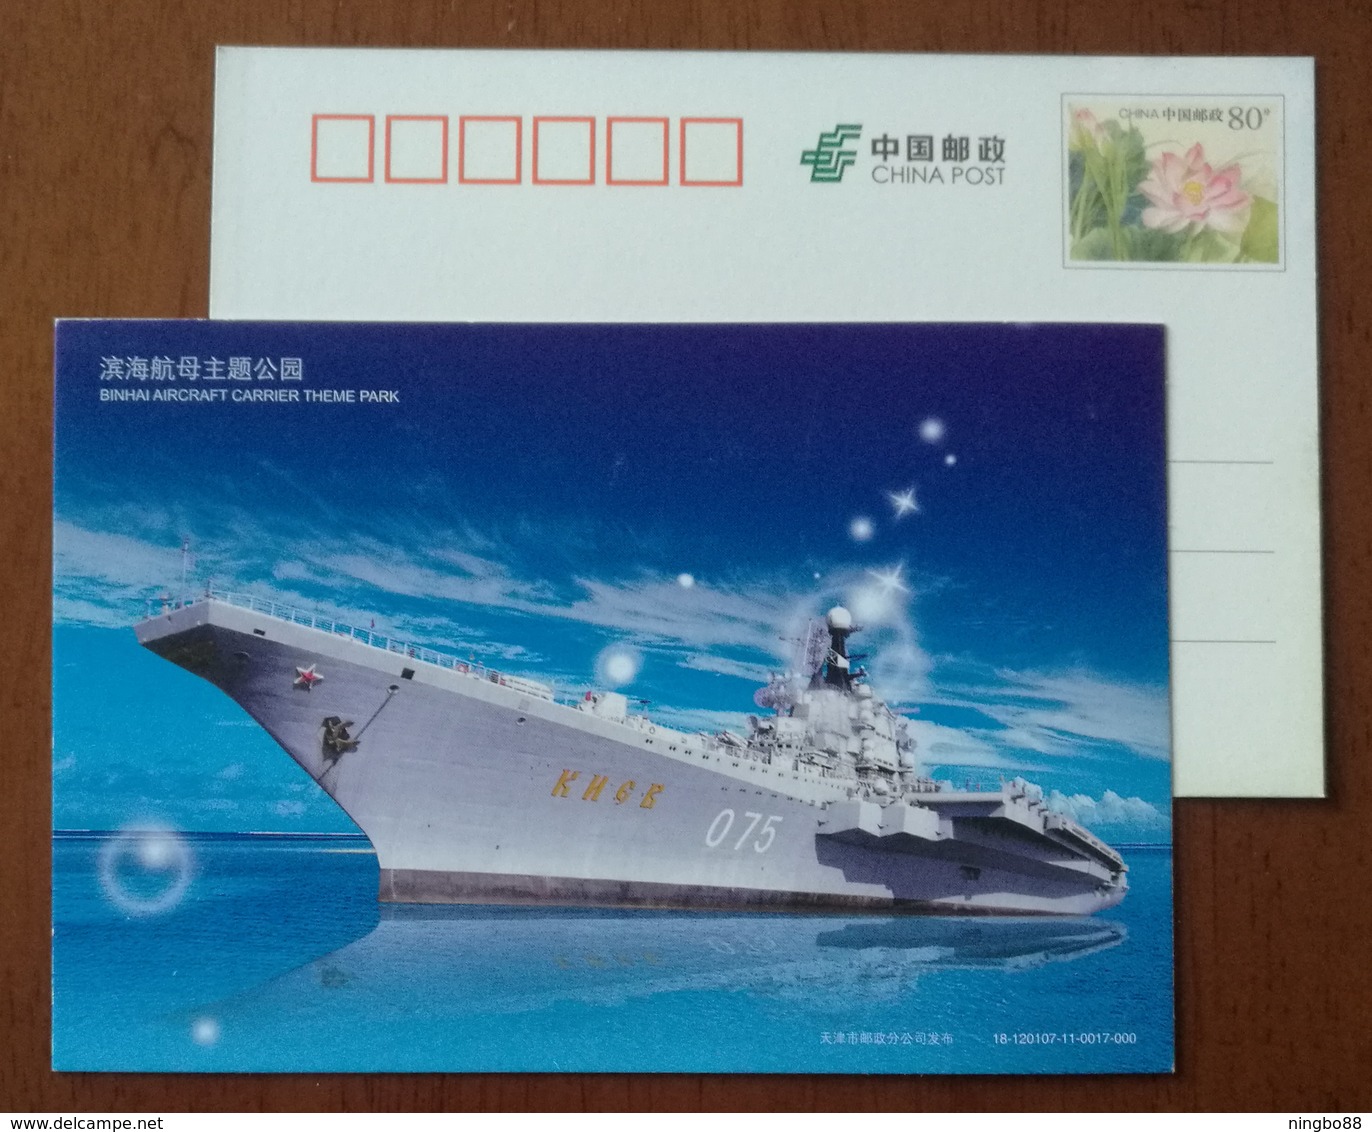 Kiev Aircraft Carrier,China 2018 Tianjin Binhai Aircraft Carrier Theme Park Advertising Pre-stamped Card - Militaria